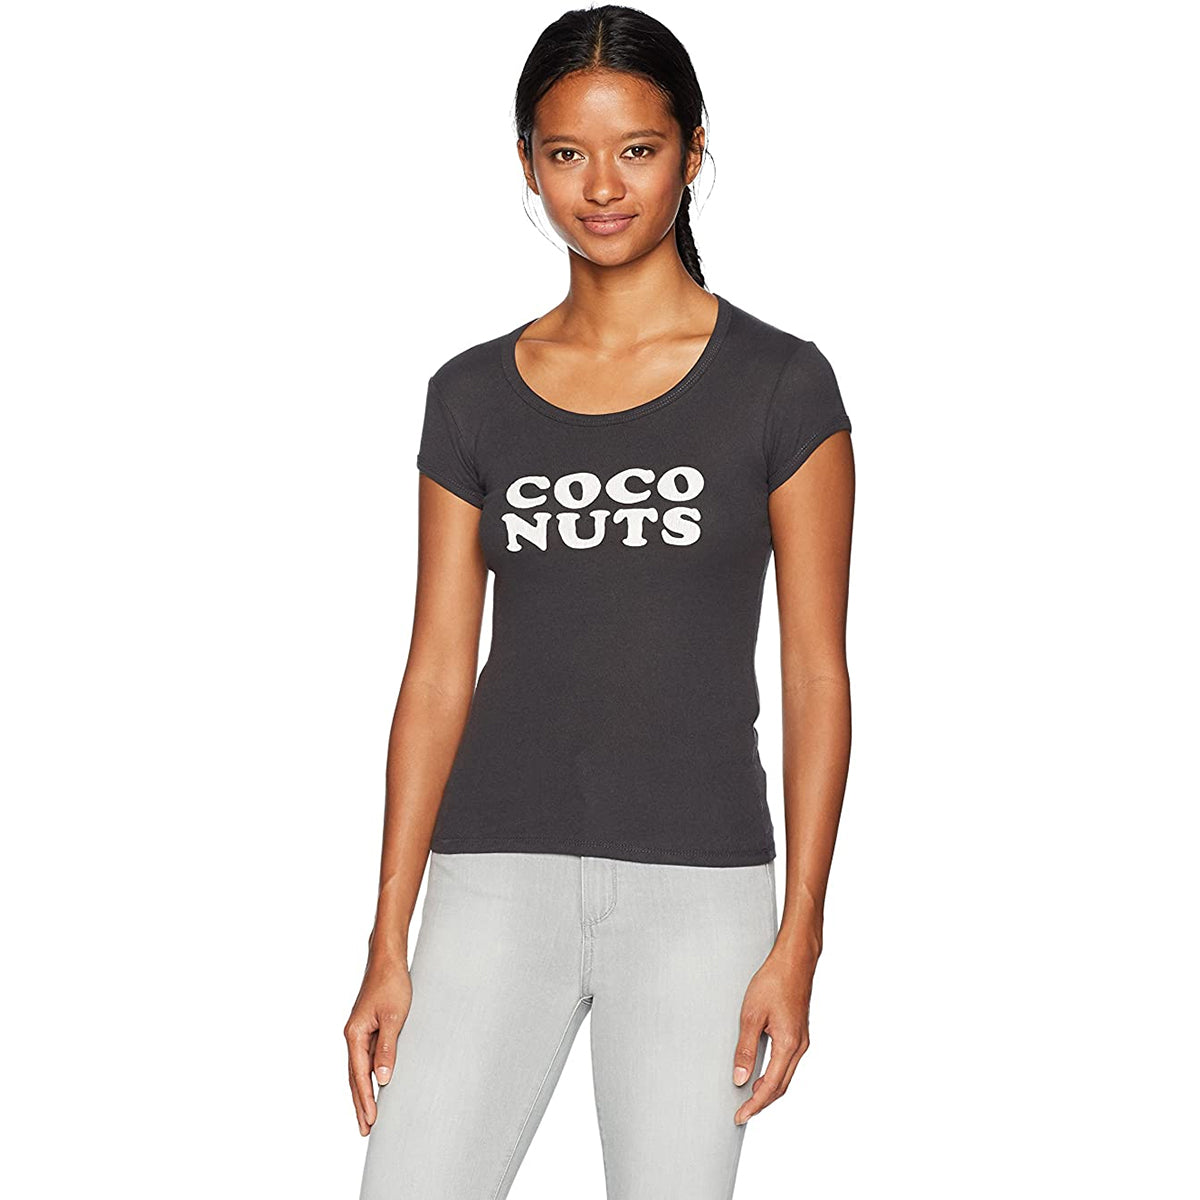 Billabong Coconuts Women's Short-Sleeve Shirts-J439LCOC